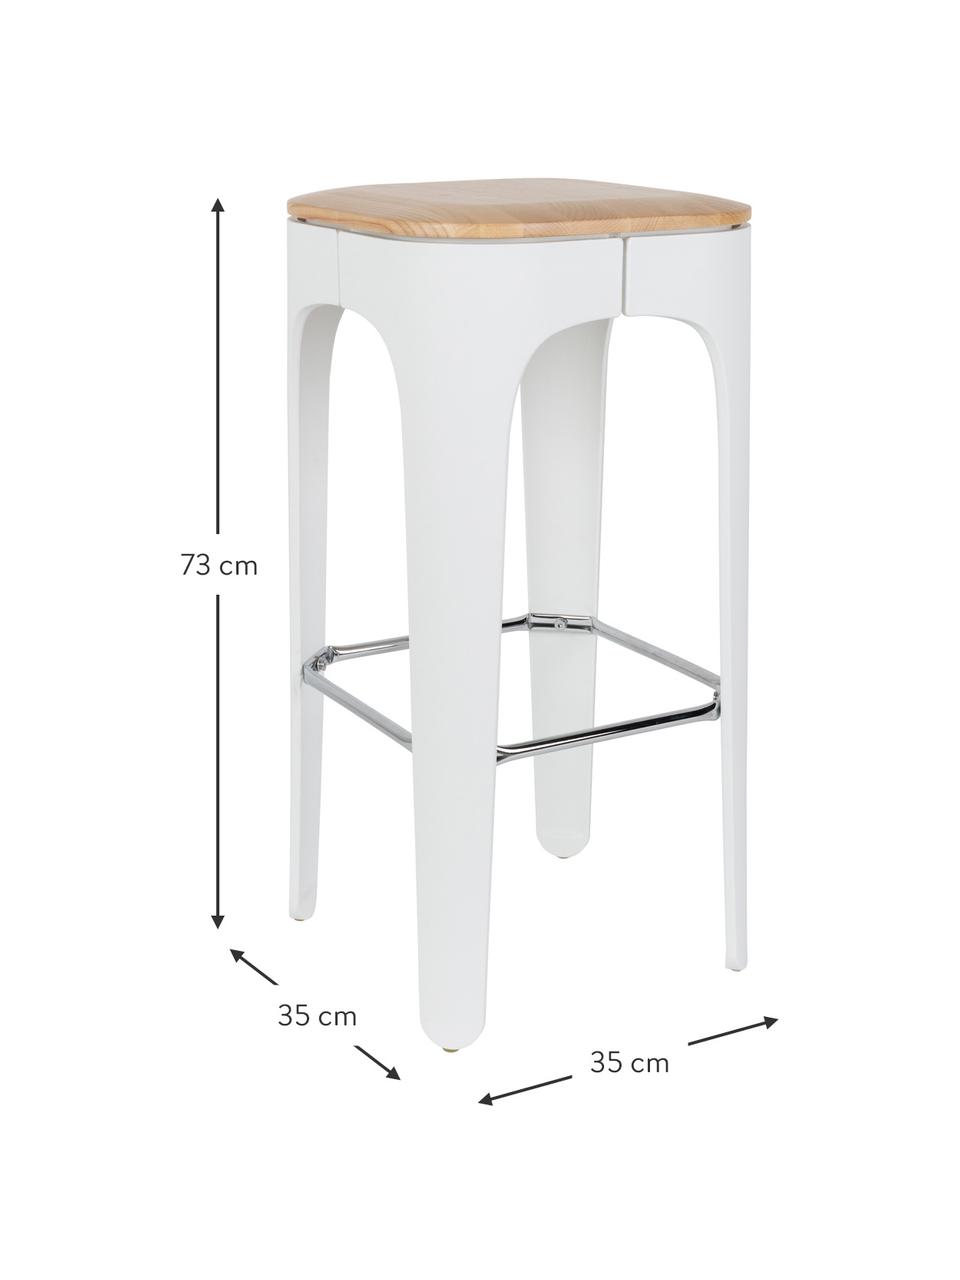 Barhocker Up-High, Beine: Polypropylen, matt lackie, Sitz: Eschenholz Beine: Weiß Fußstütze: Chrom, 35 x 73 cm